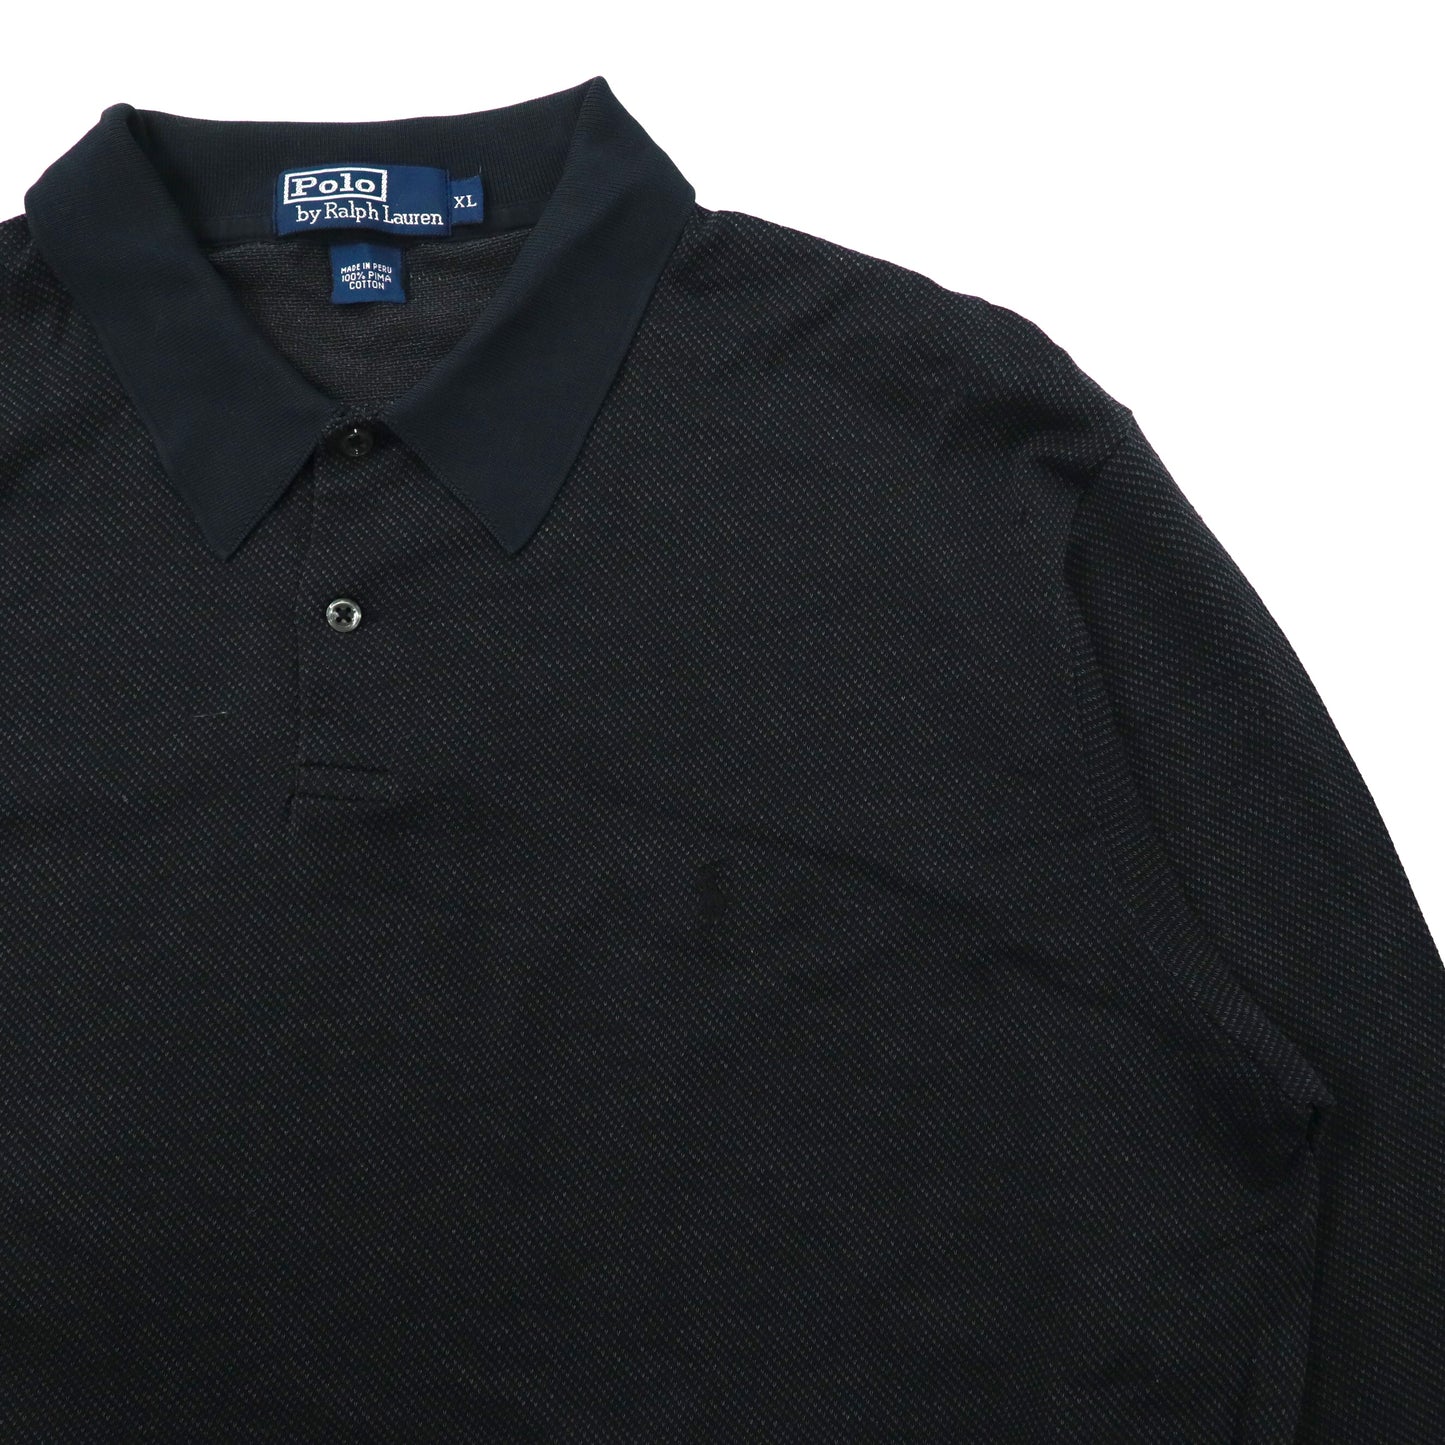 Polo by Ralph Lauren ビッグサイズ 長袖ポロシャツ XL ブラック ピマコットン バーズアイ スモールポニー刺繍 ペルー製